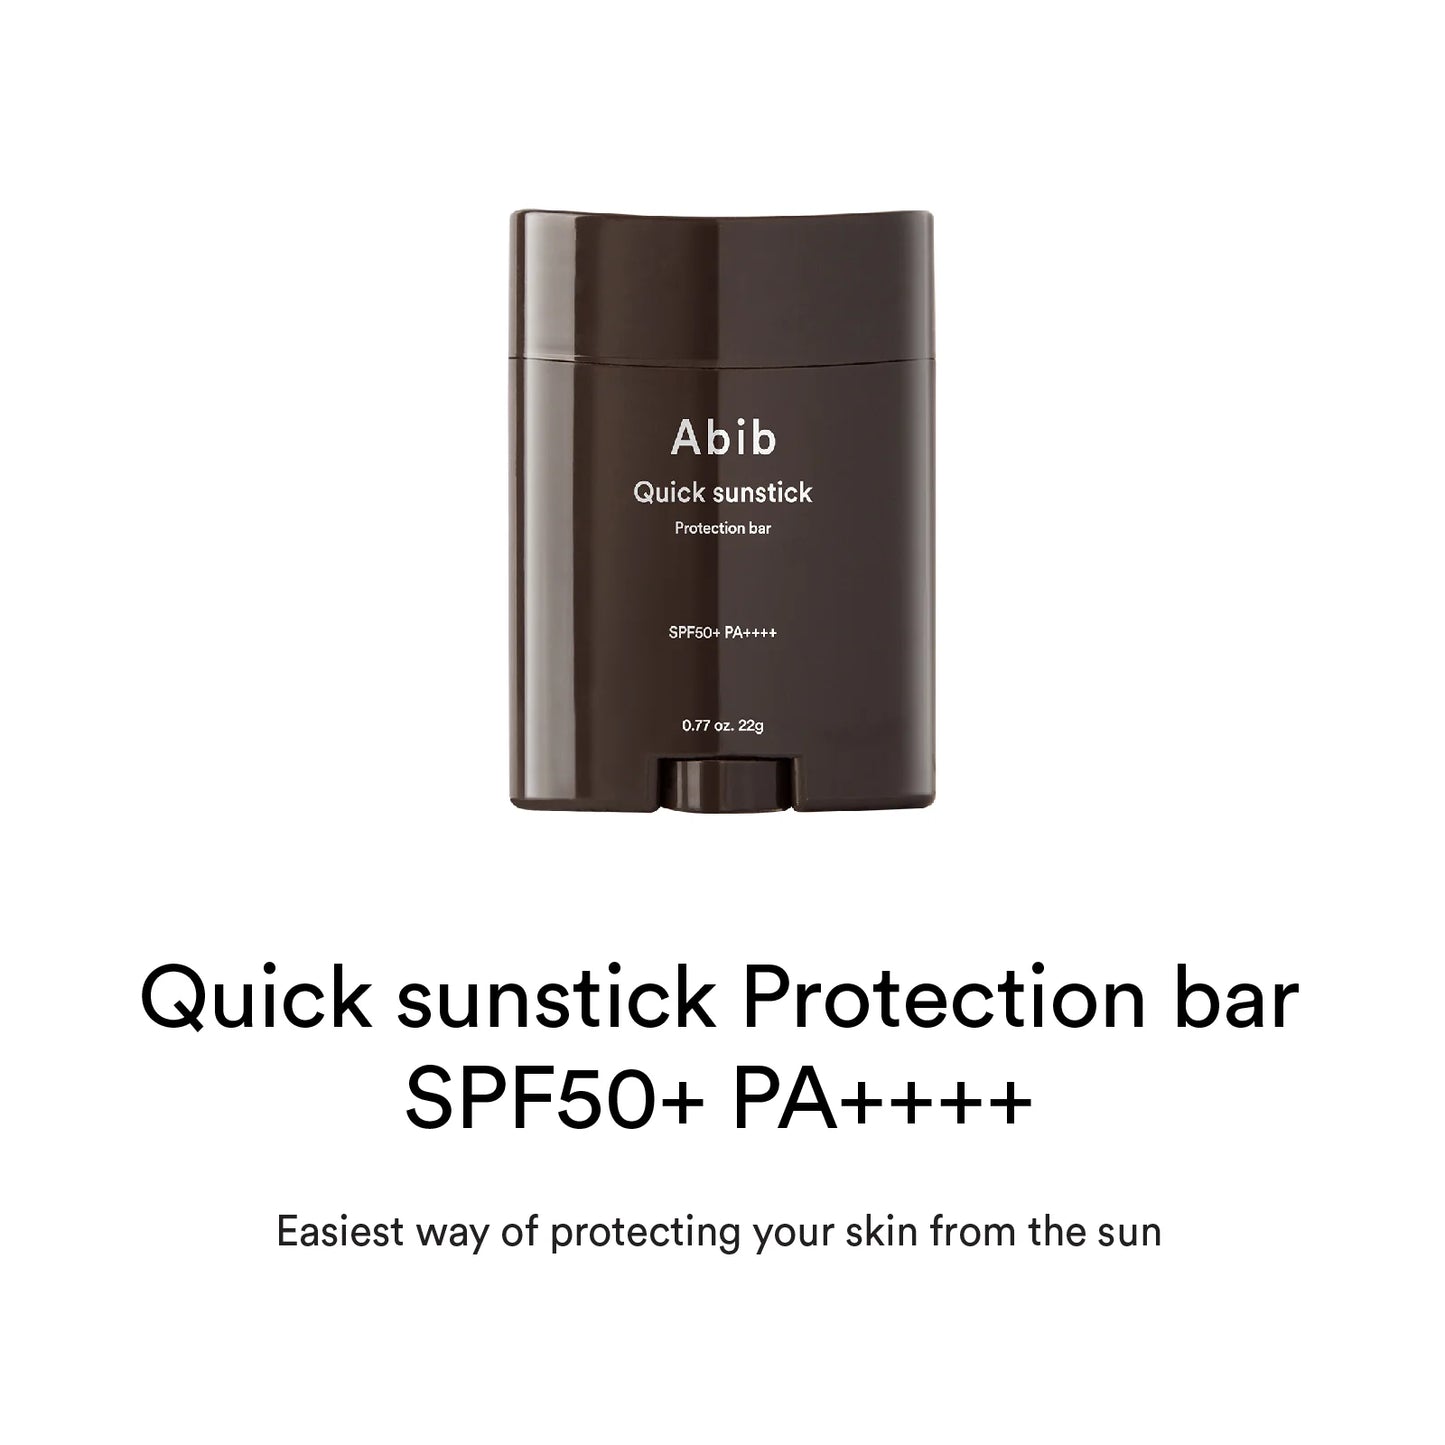 Abib - Quick sunstick Protection bar 22g